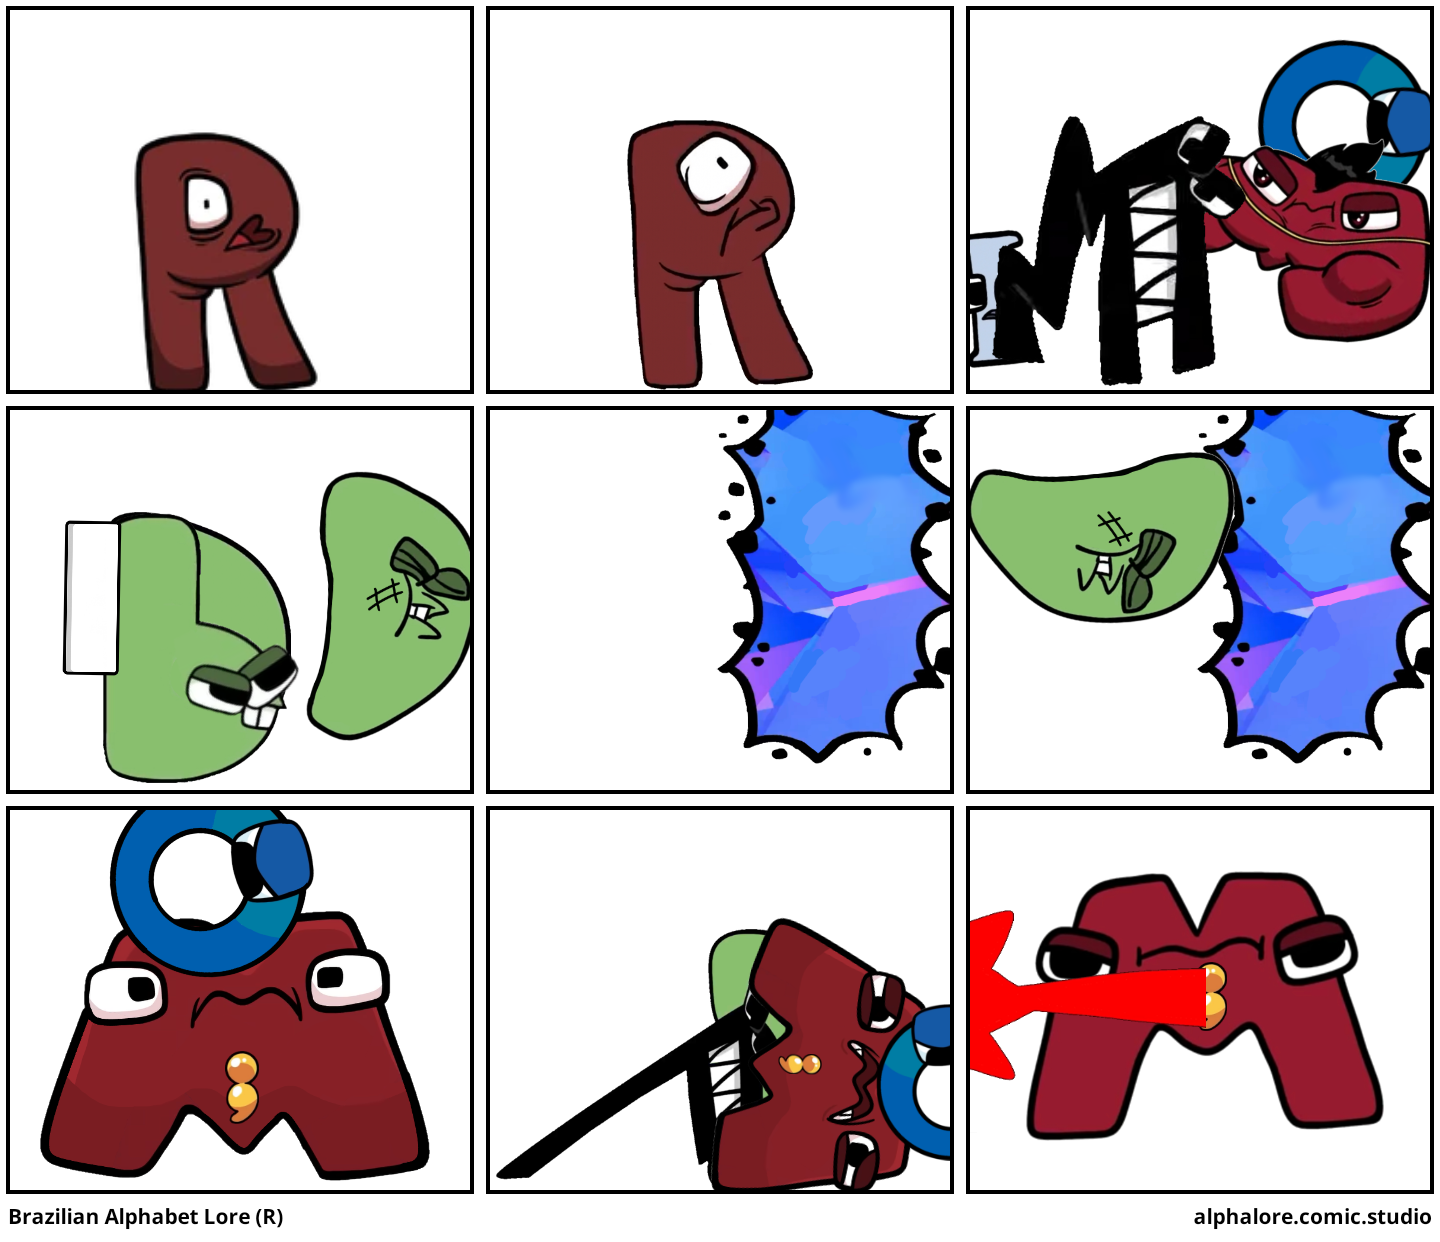 alphabet lore comics : r/alphabetfriends